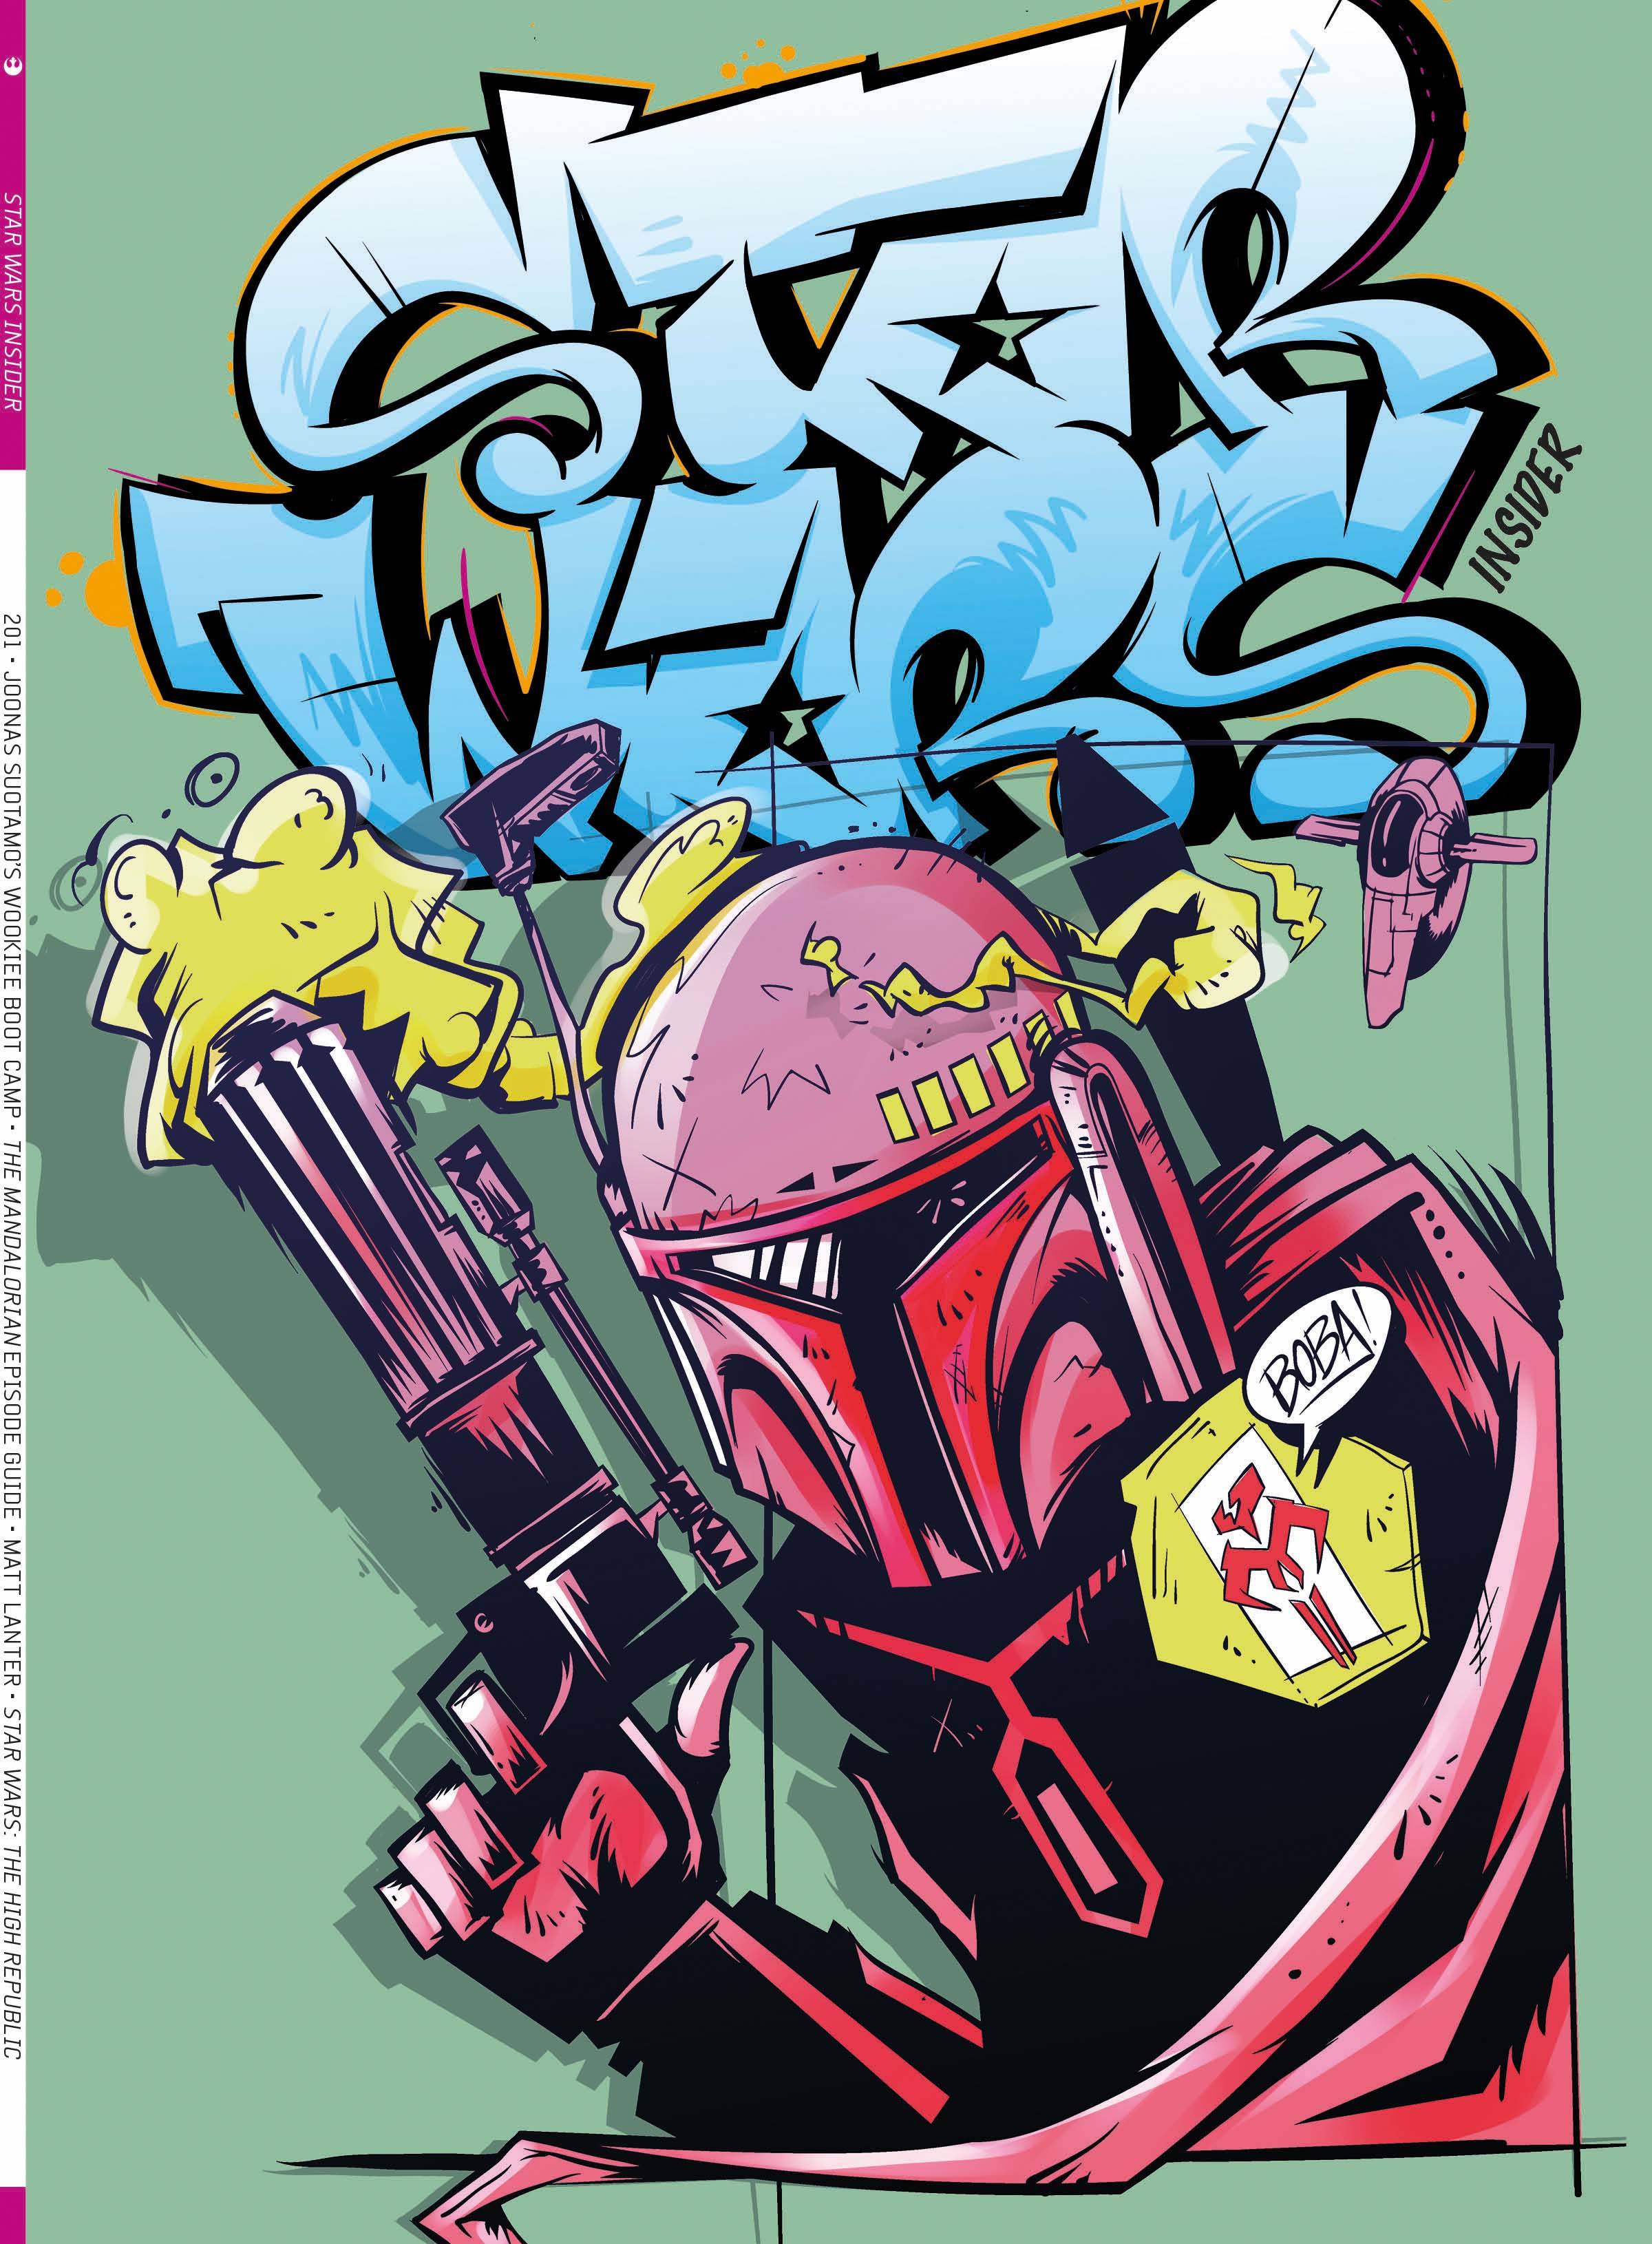 STAR WARS INSIDER #200 & #201 PX EDITION 03/31/21